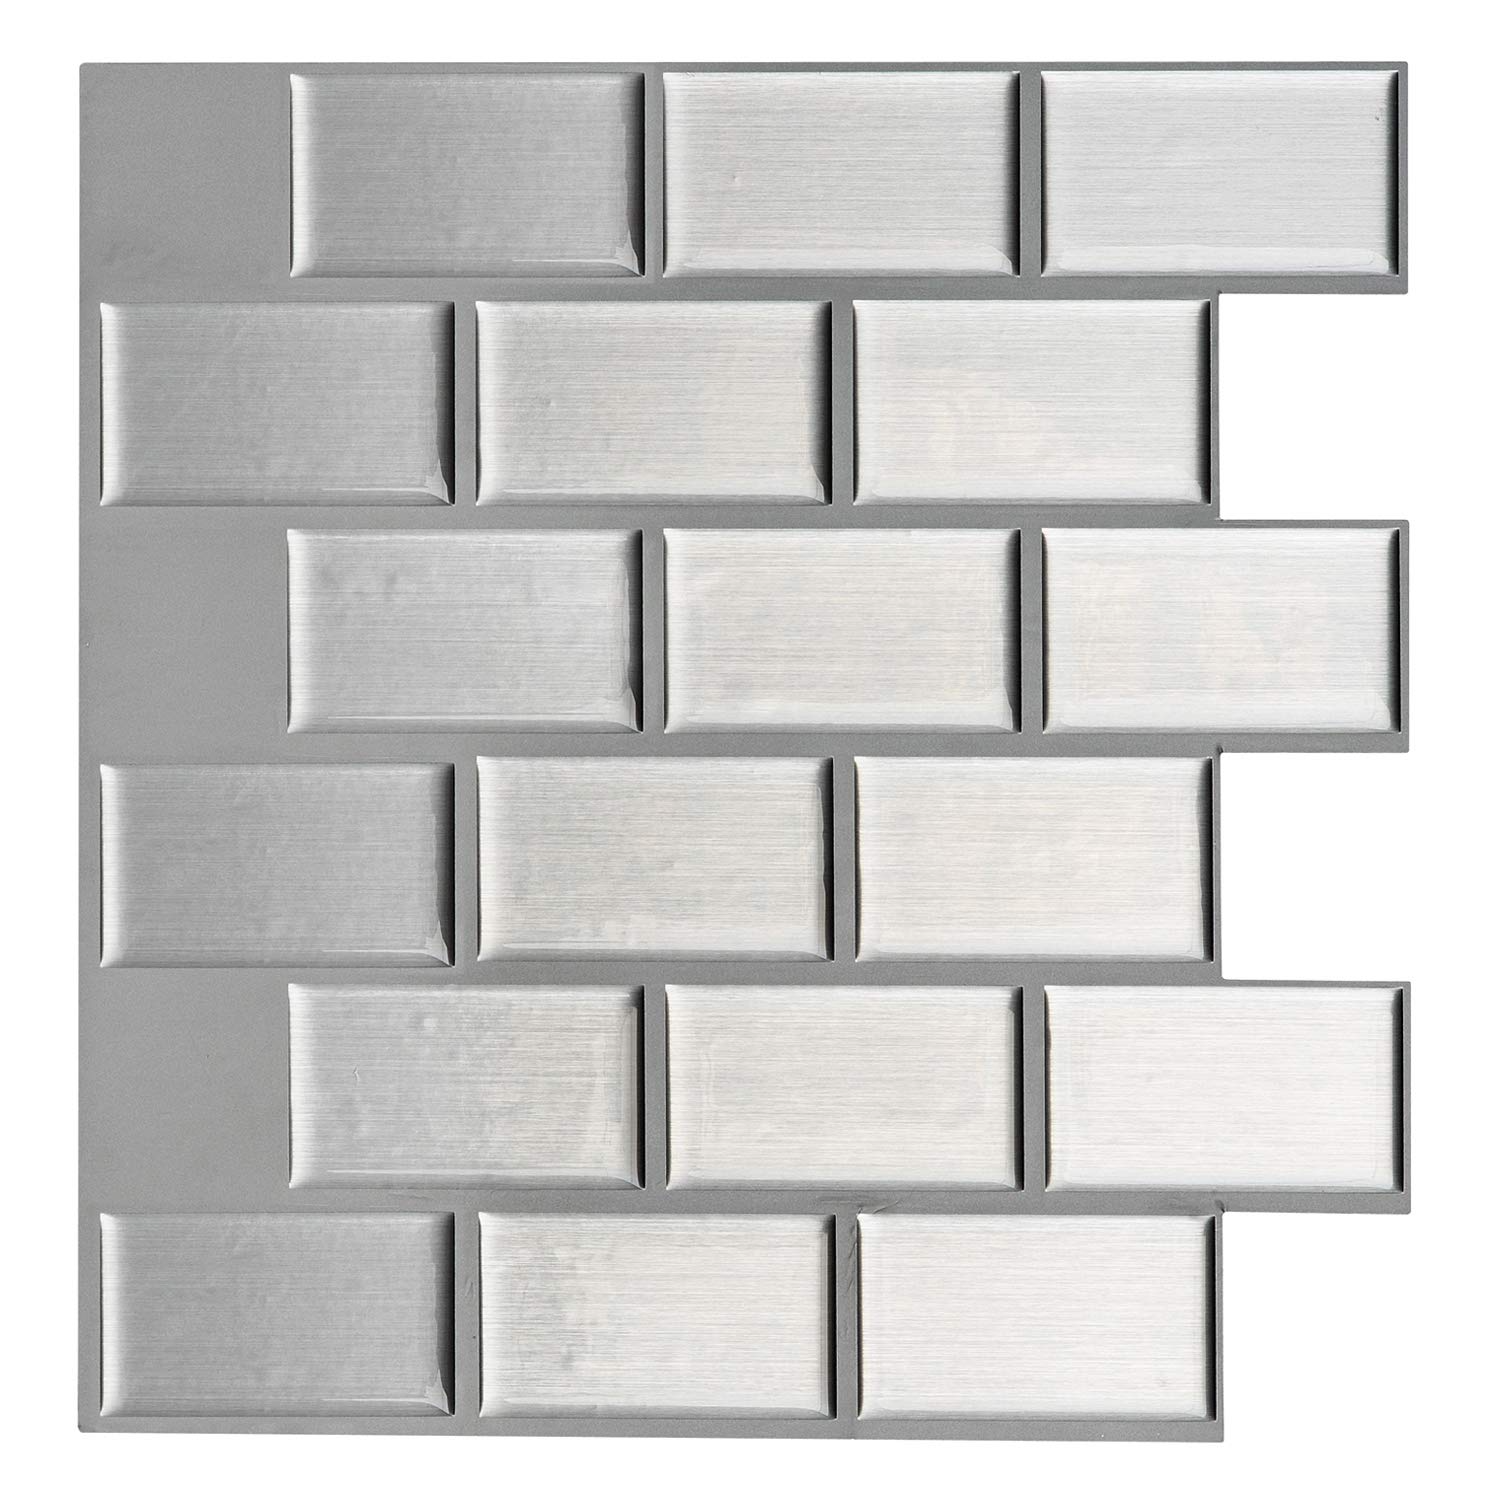 Art3d 100-pieces Peel and Stick Stainless Steel Backsplash Self-adhesive  Metal Tiles, 3 X 6 Subway Stove Backsplash not Magnetic -  Norway